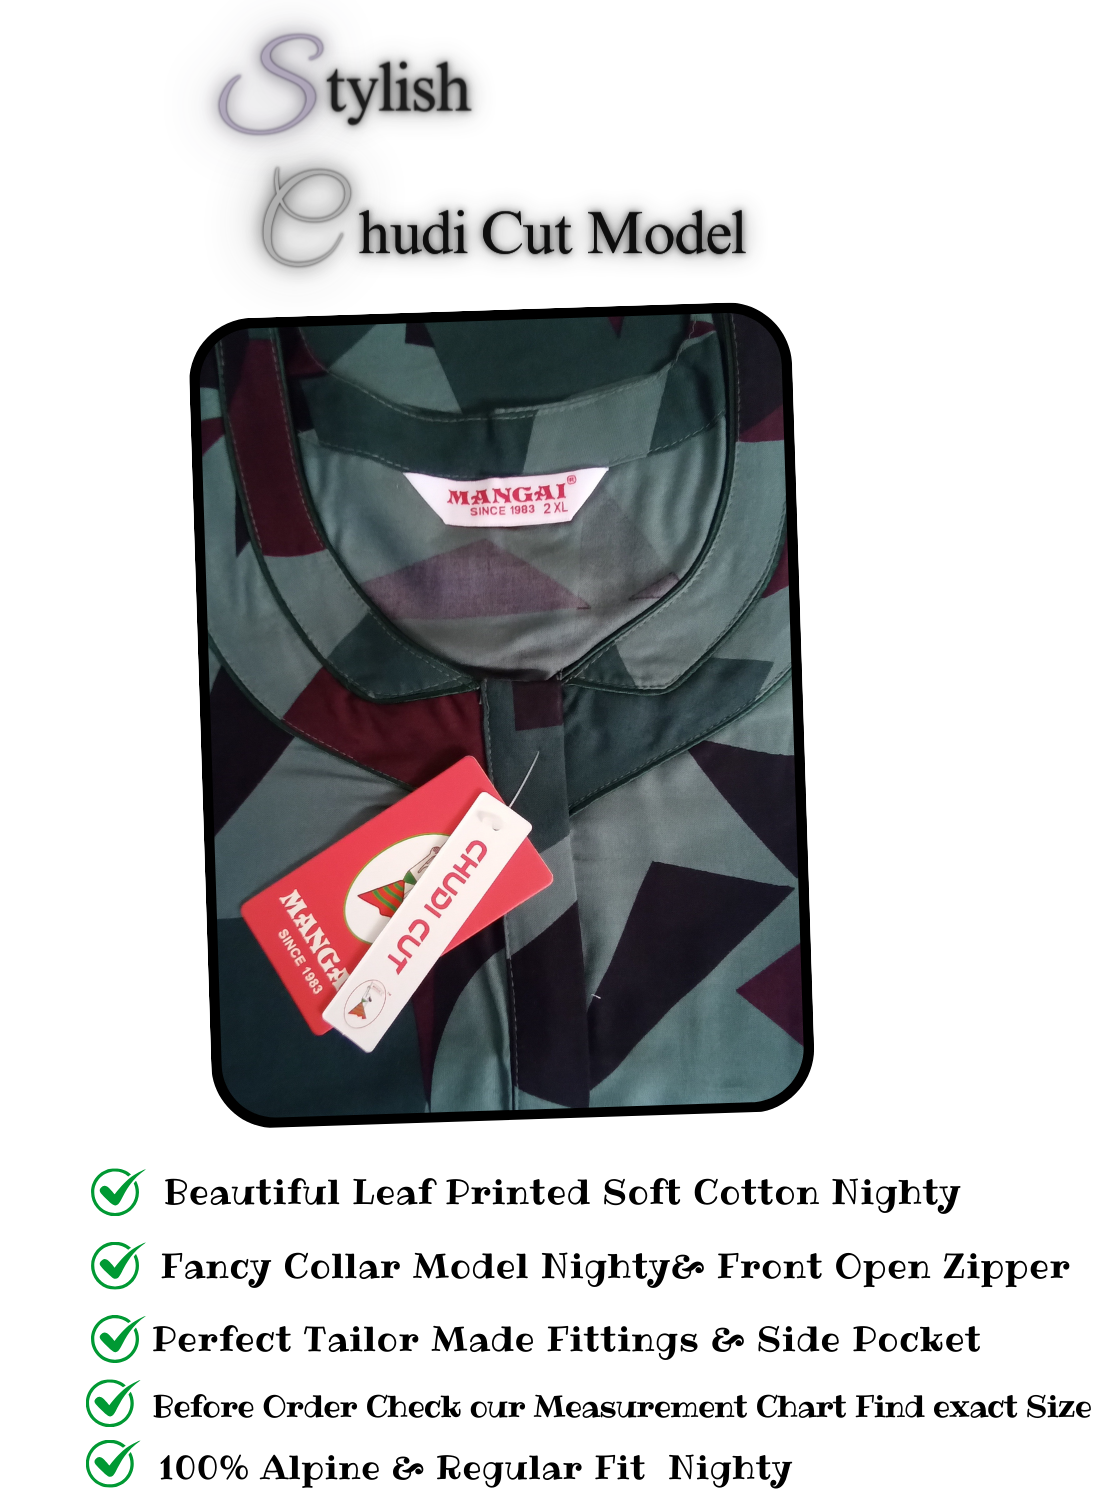 MANGAI New Alpine CHUDI CUT Model Nighties - Fancy Neck | With Side Pocket |Shrinkage Free Nighties | Stylish Collection's for Trendy Women's